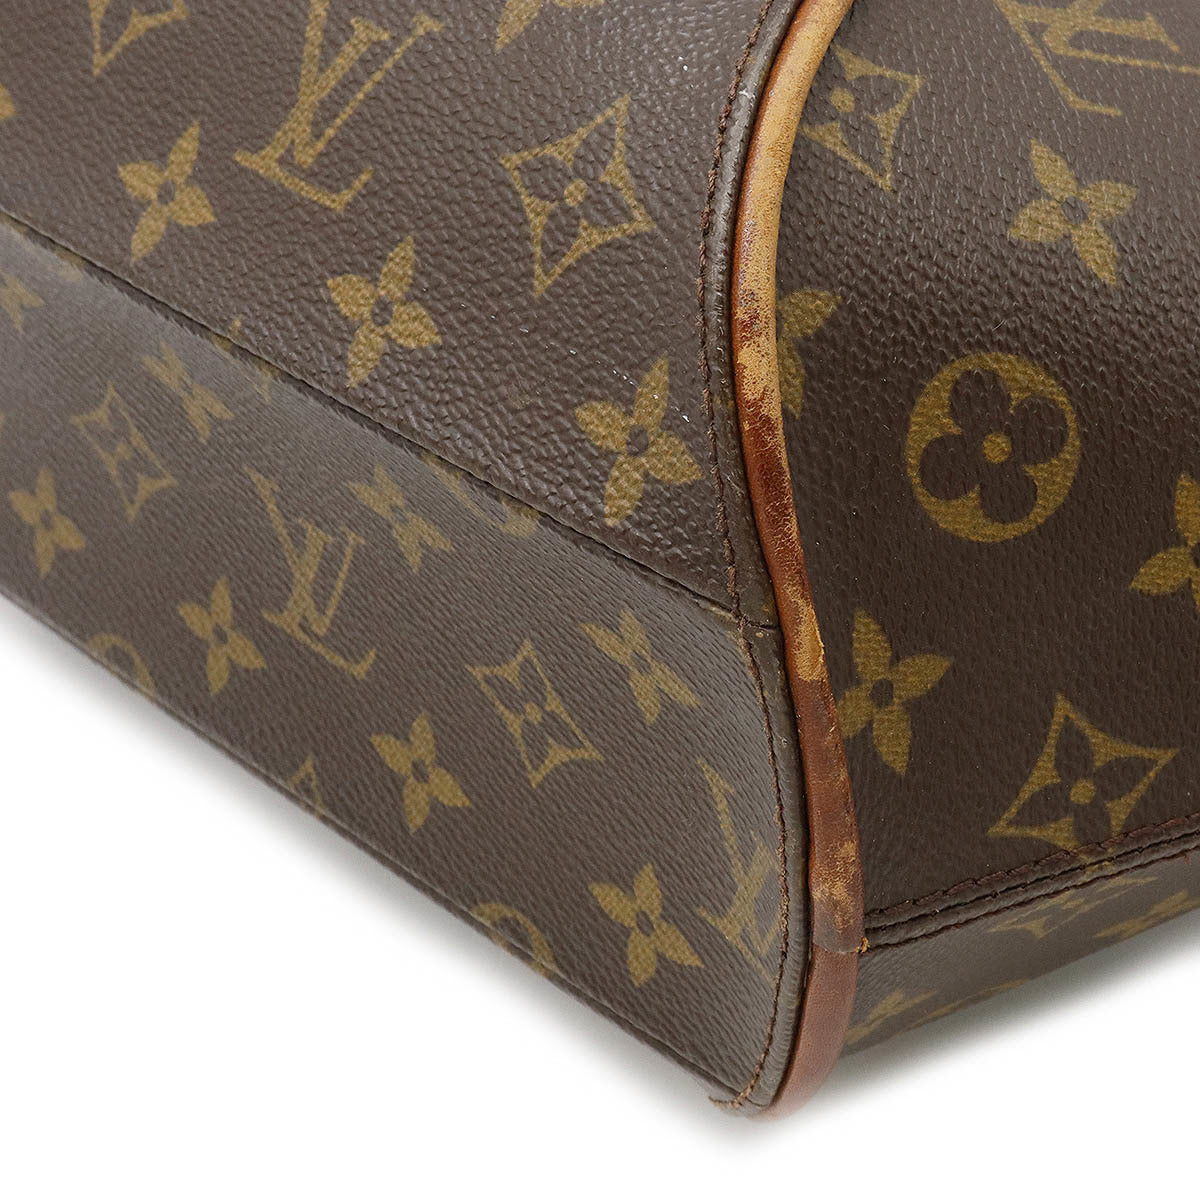 Pre-owned Louis Vuitton Yellow Epi Leather Phenix Pm Bag